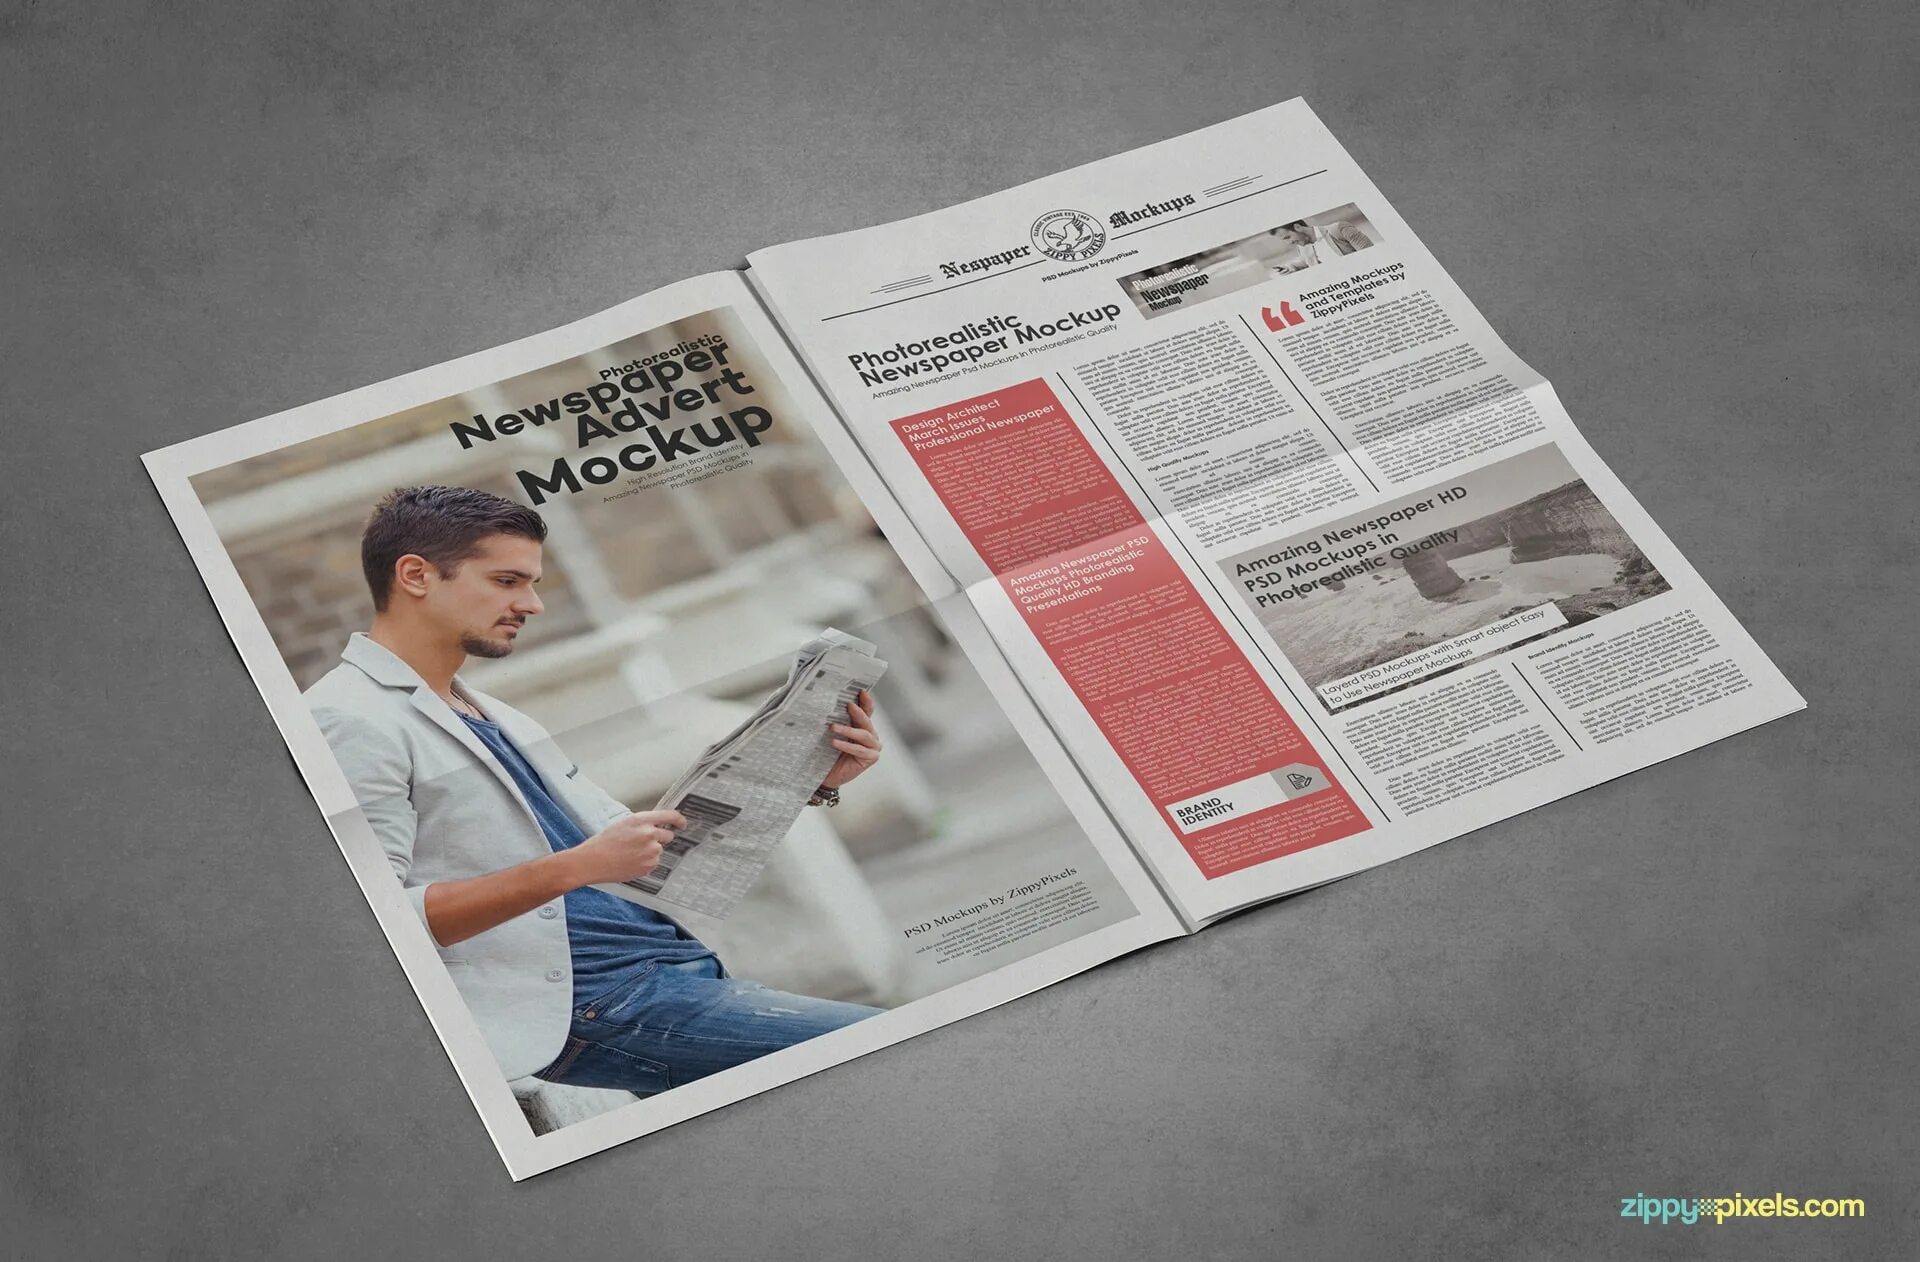 Newspaper advertisement. Газета мокап. Дизайн газеты. Современный дизайн газеты. Газета графический дизайн.